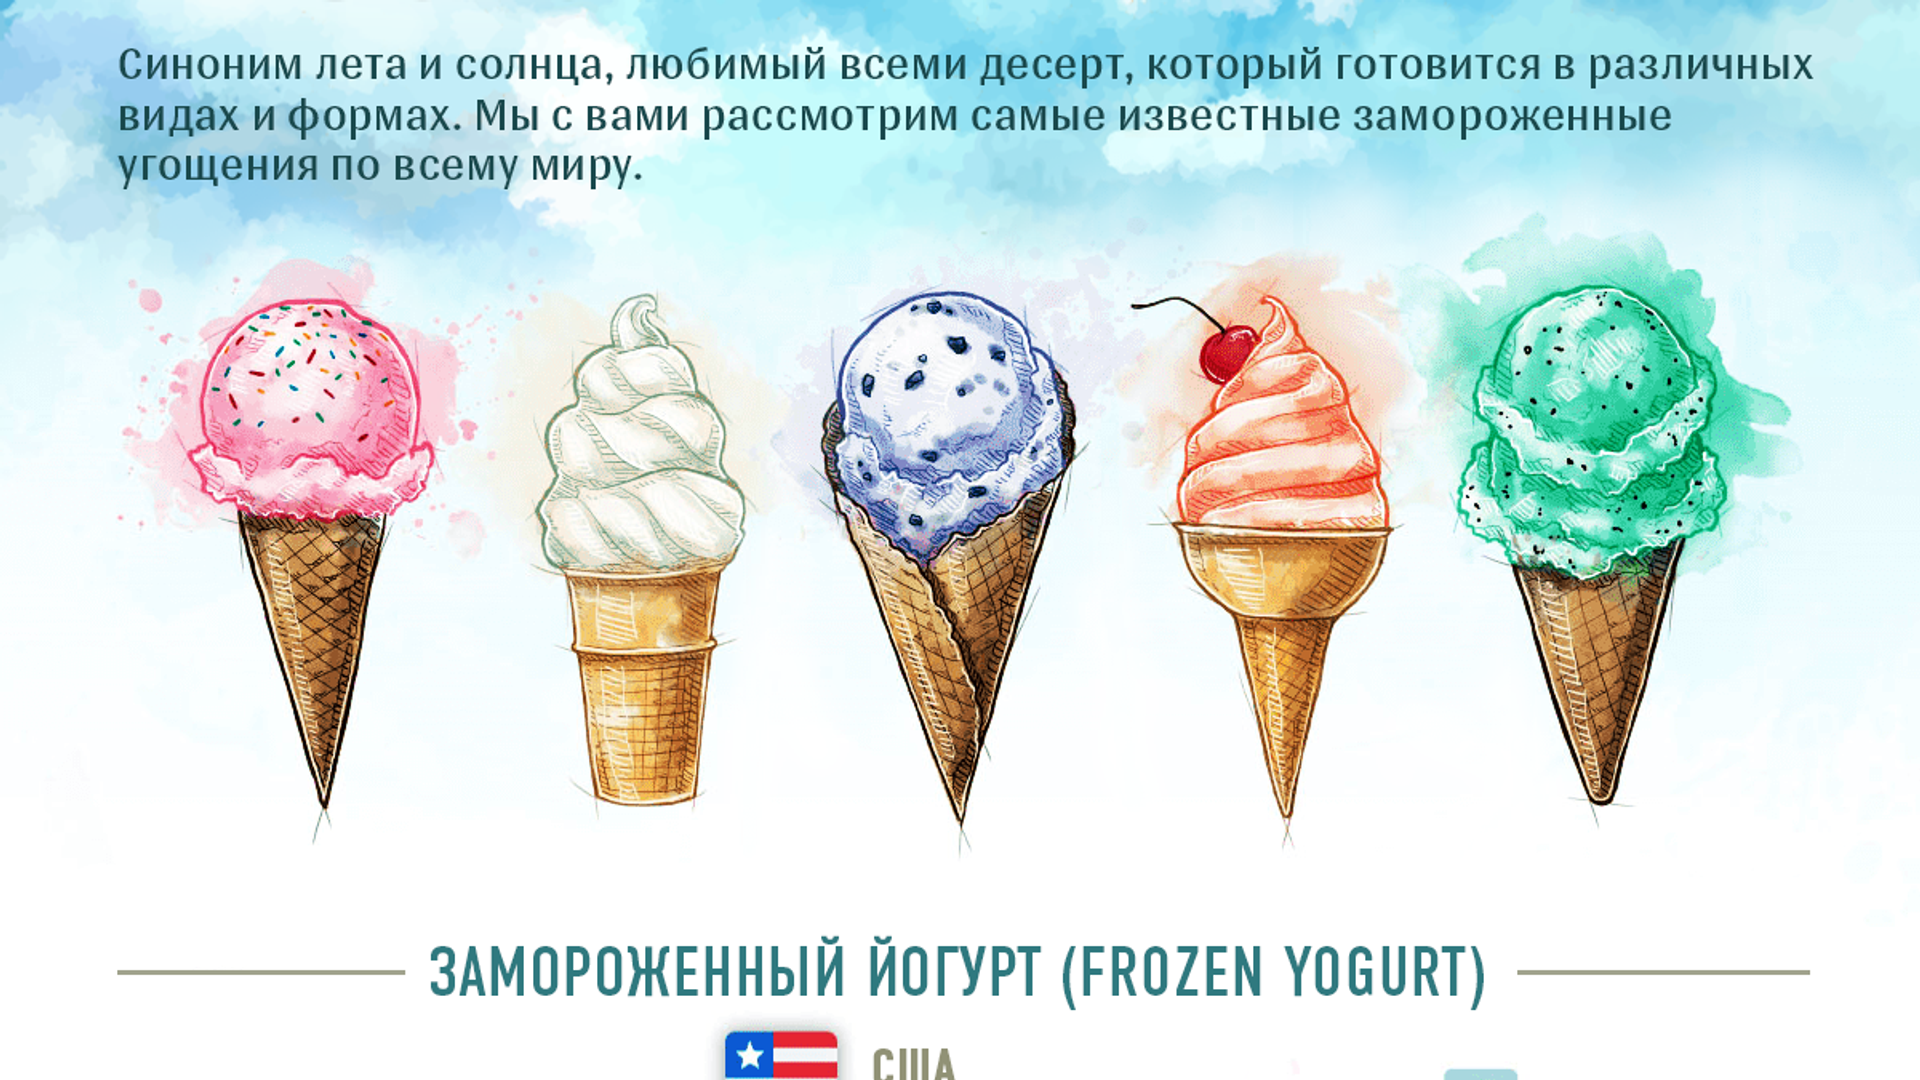 Математика мороженого. Название мороженого. Мороженое разные. Мороженое разные виды. Разные формы мороженого.